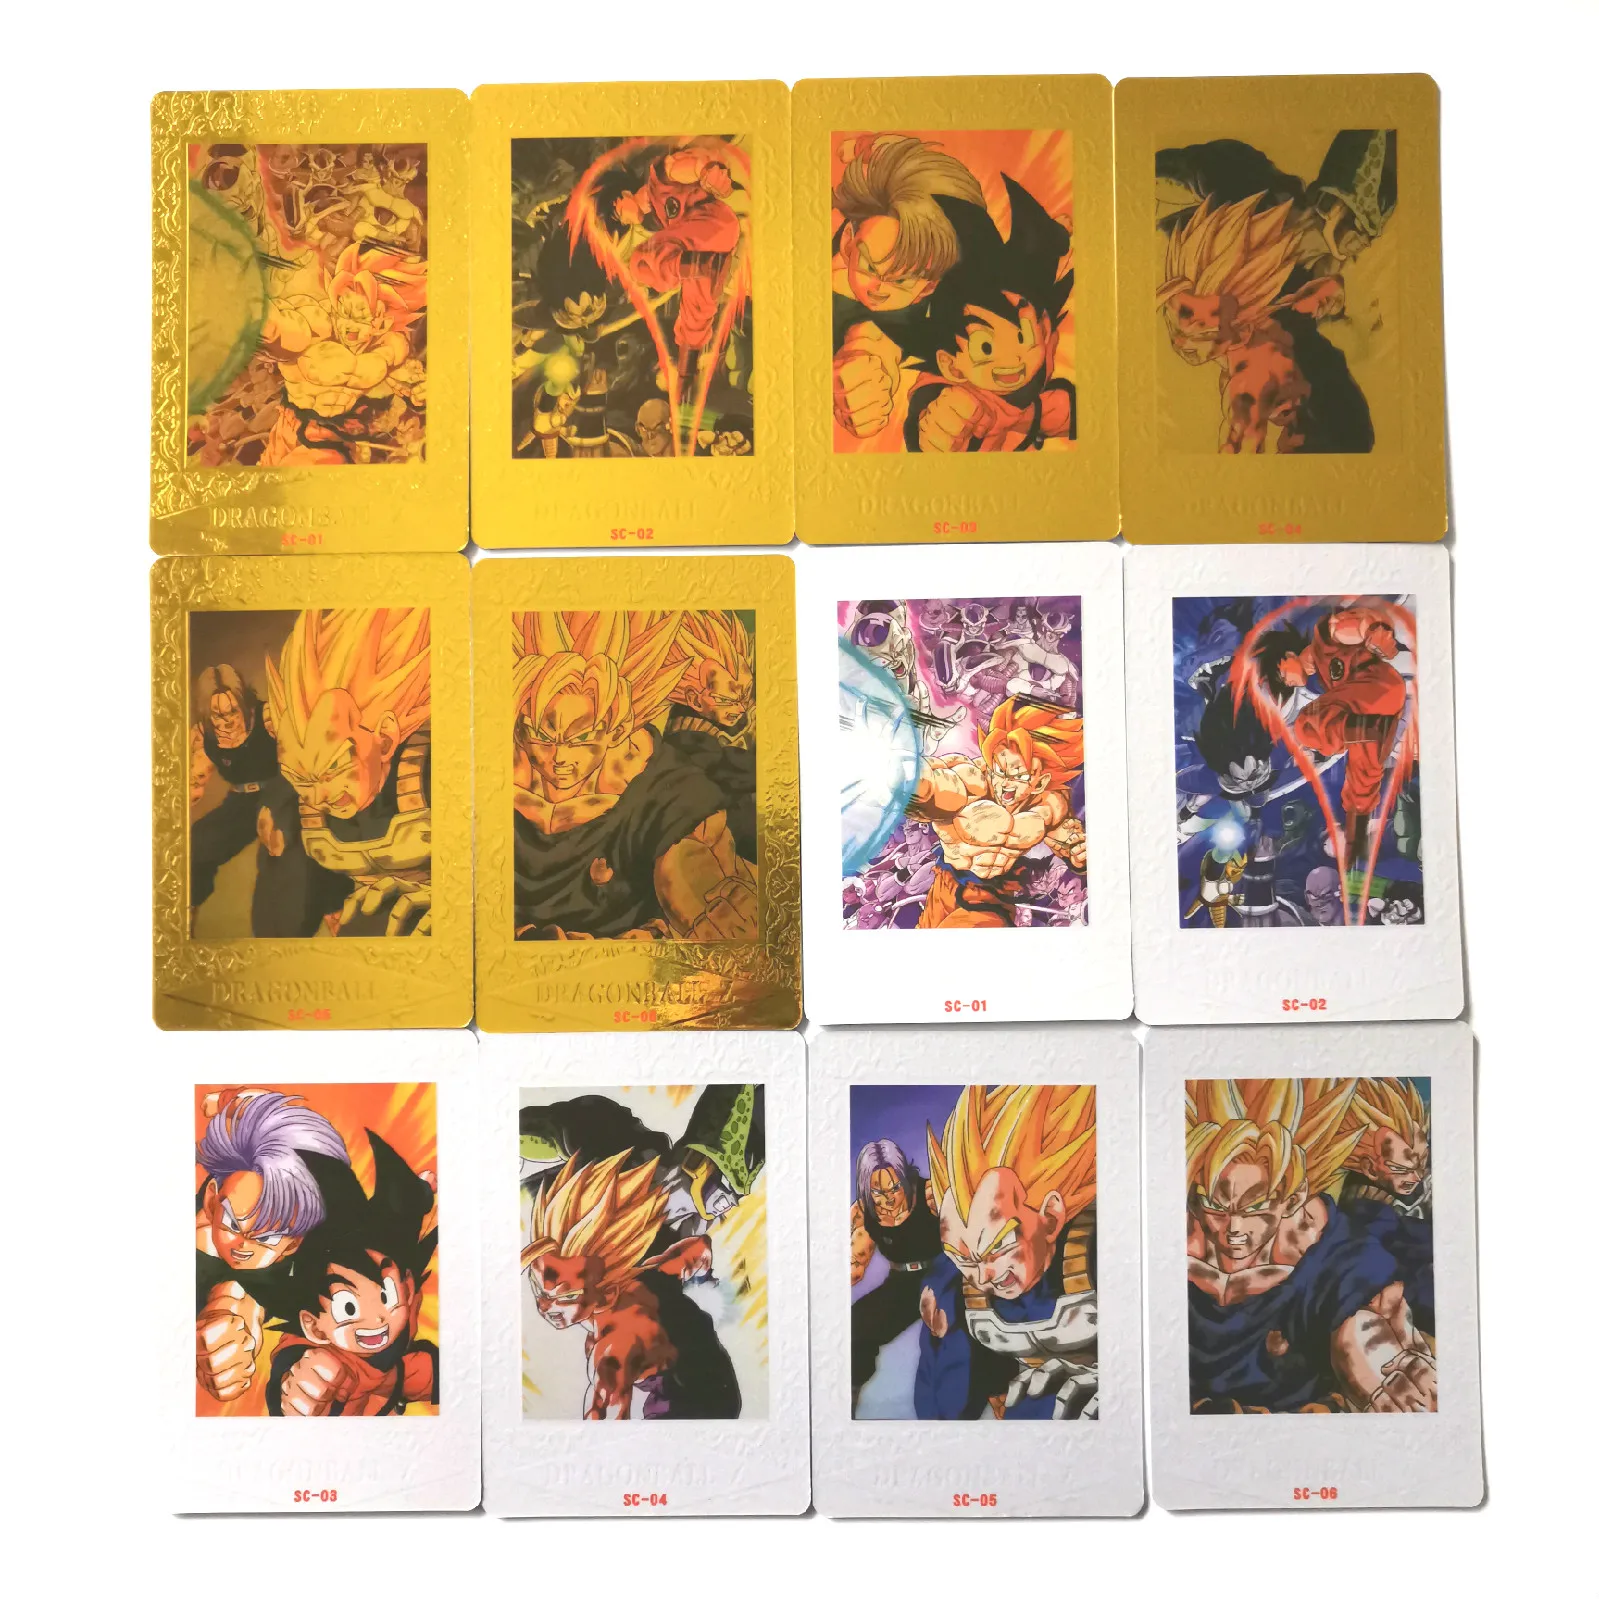 

27pcs/set MAX5 Super Dragon Ball Z Heroes Battle Card Ultra Instinct Goku Vegeta Game Collection Cards